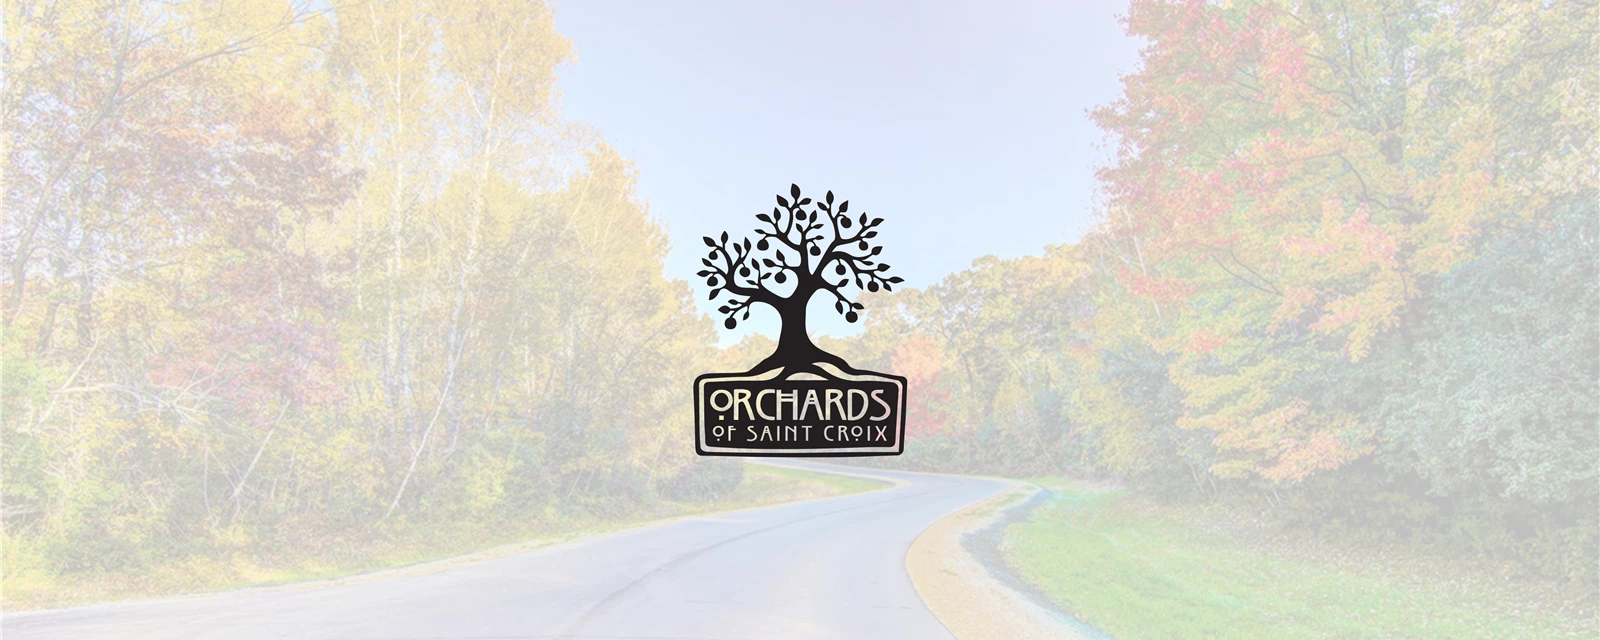 Orchards of Saint Croix Logo